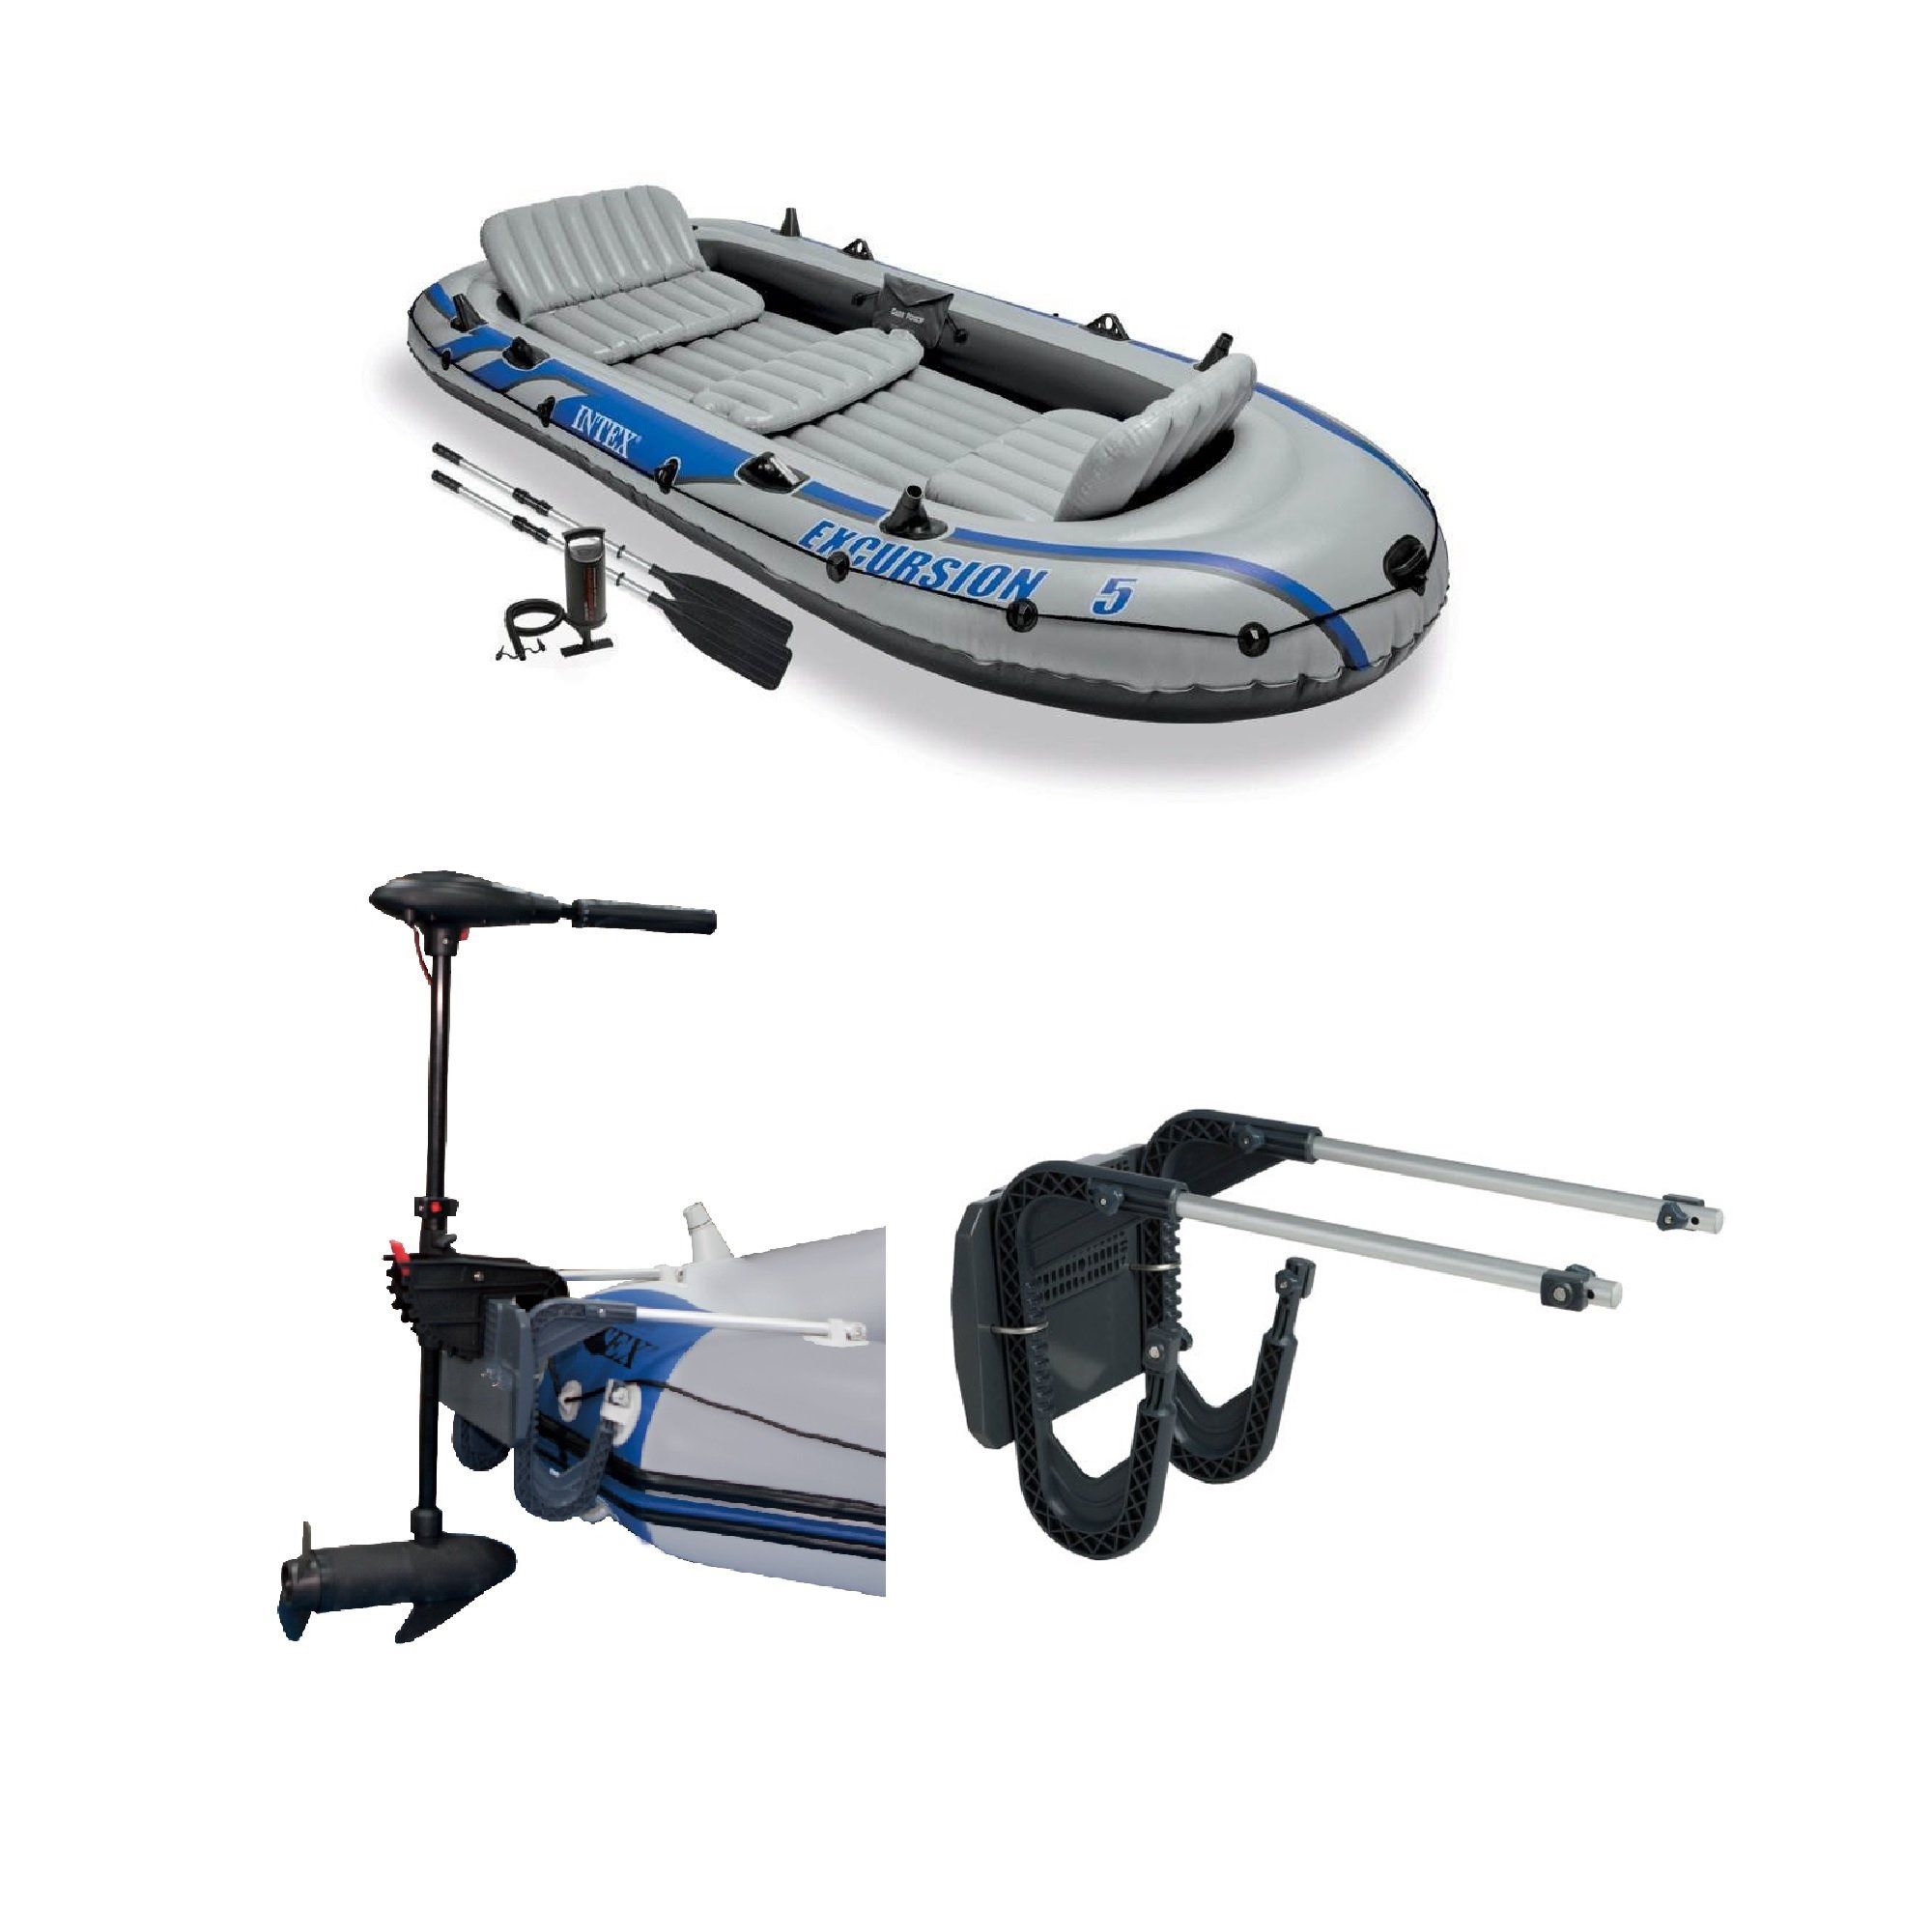 UNUSED 5-Person Inflatable Fishing Boat, Trolling Motor (used), Boat Motor Mount Kit, 2 life jackets, & Pump (used)